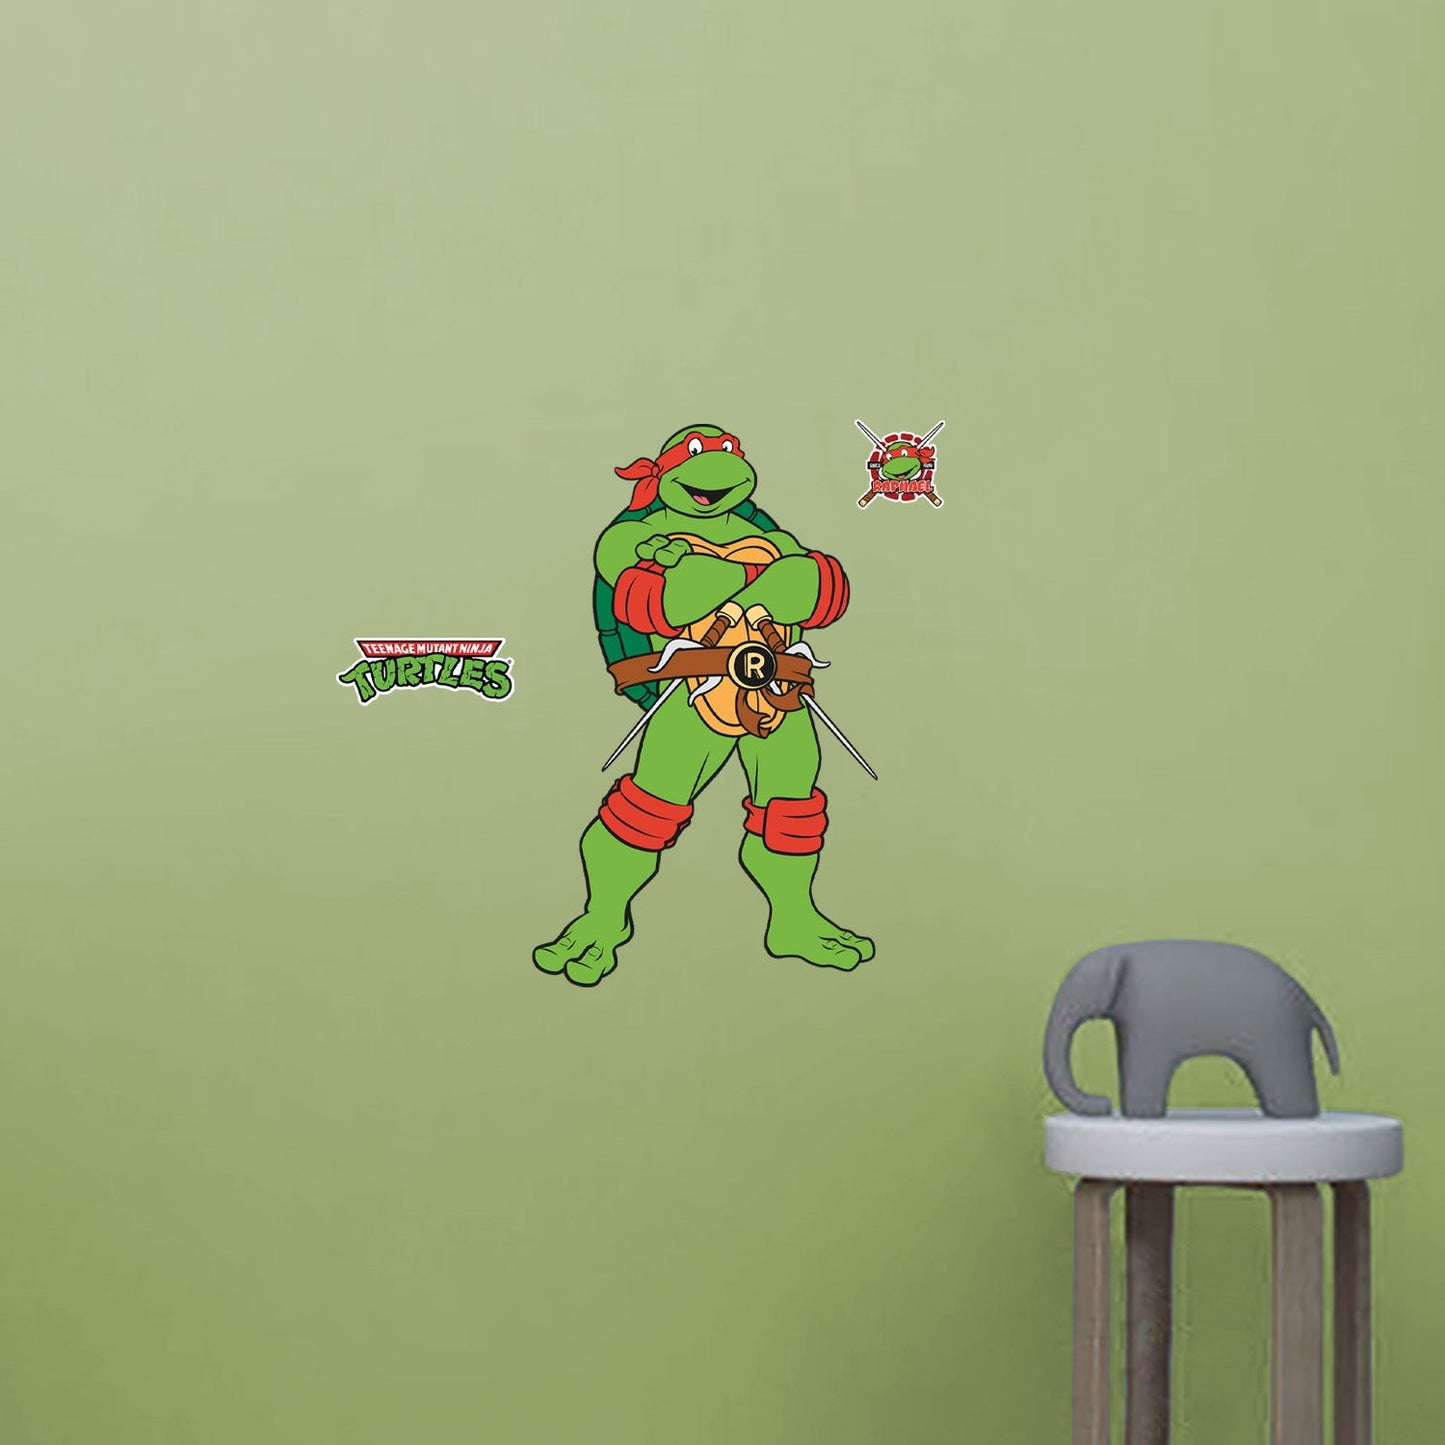 Teenage Mutant Ninja Turtles: Raphael Classic RealBig - Officially Licensed Nickelodeon Removable Adhesive Decal